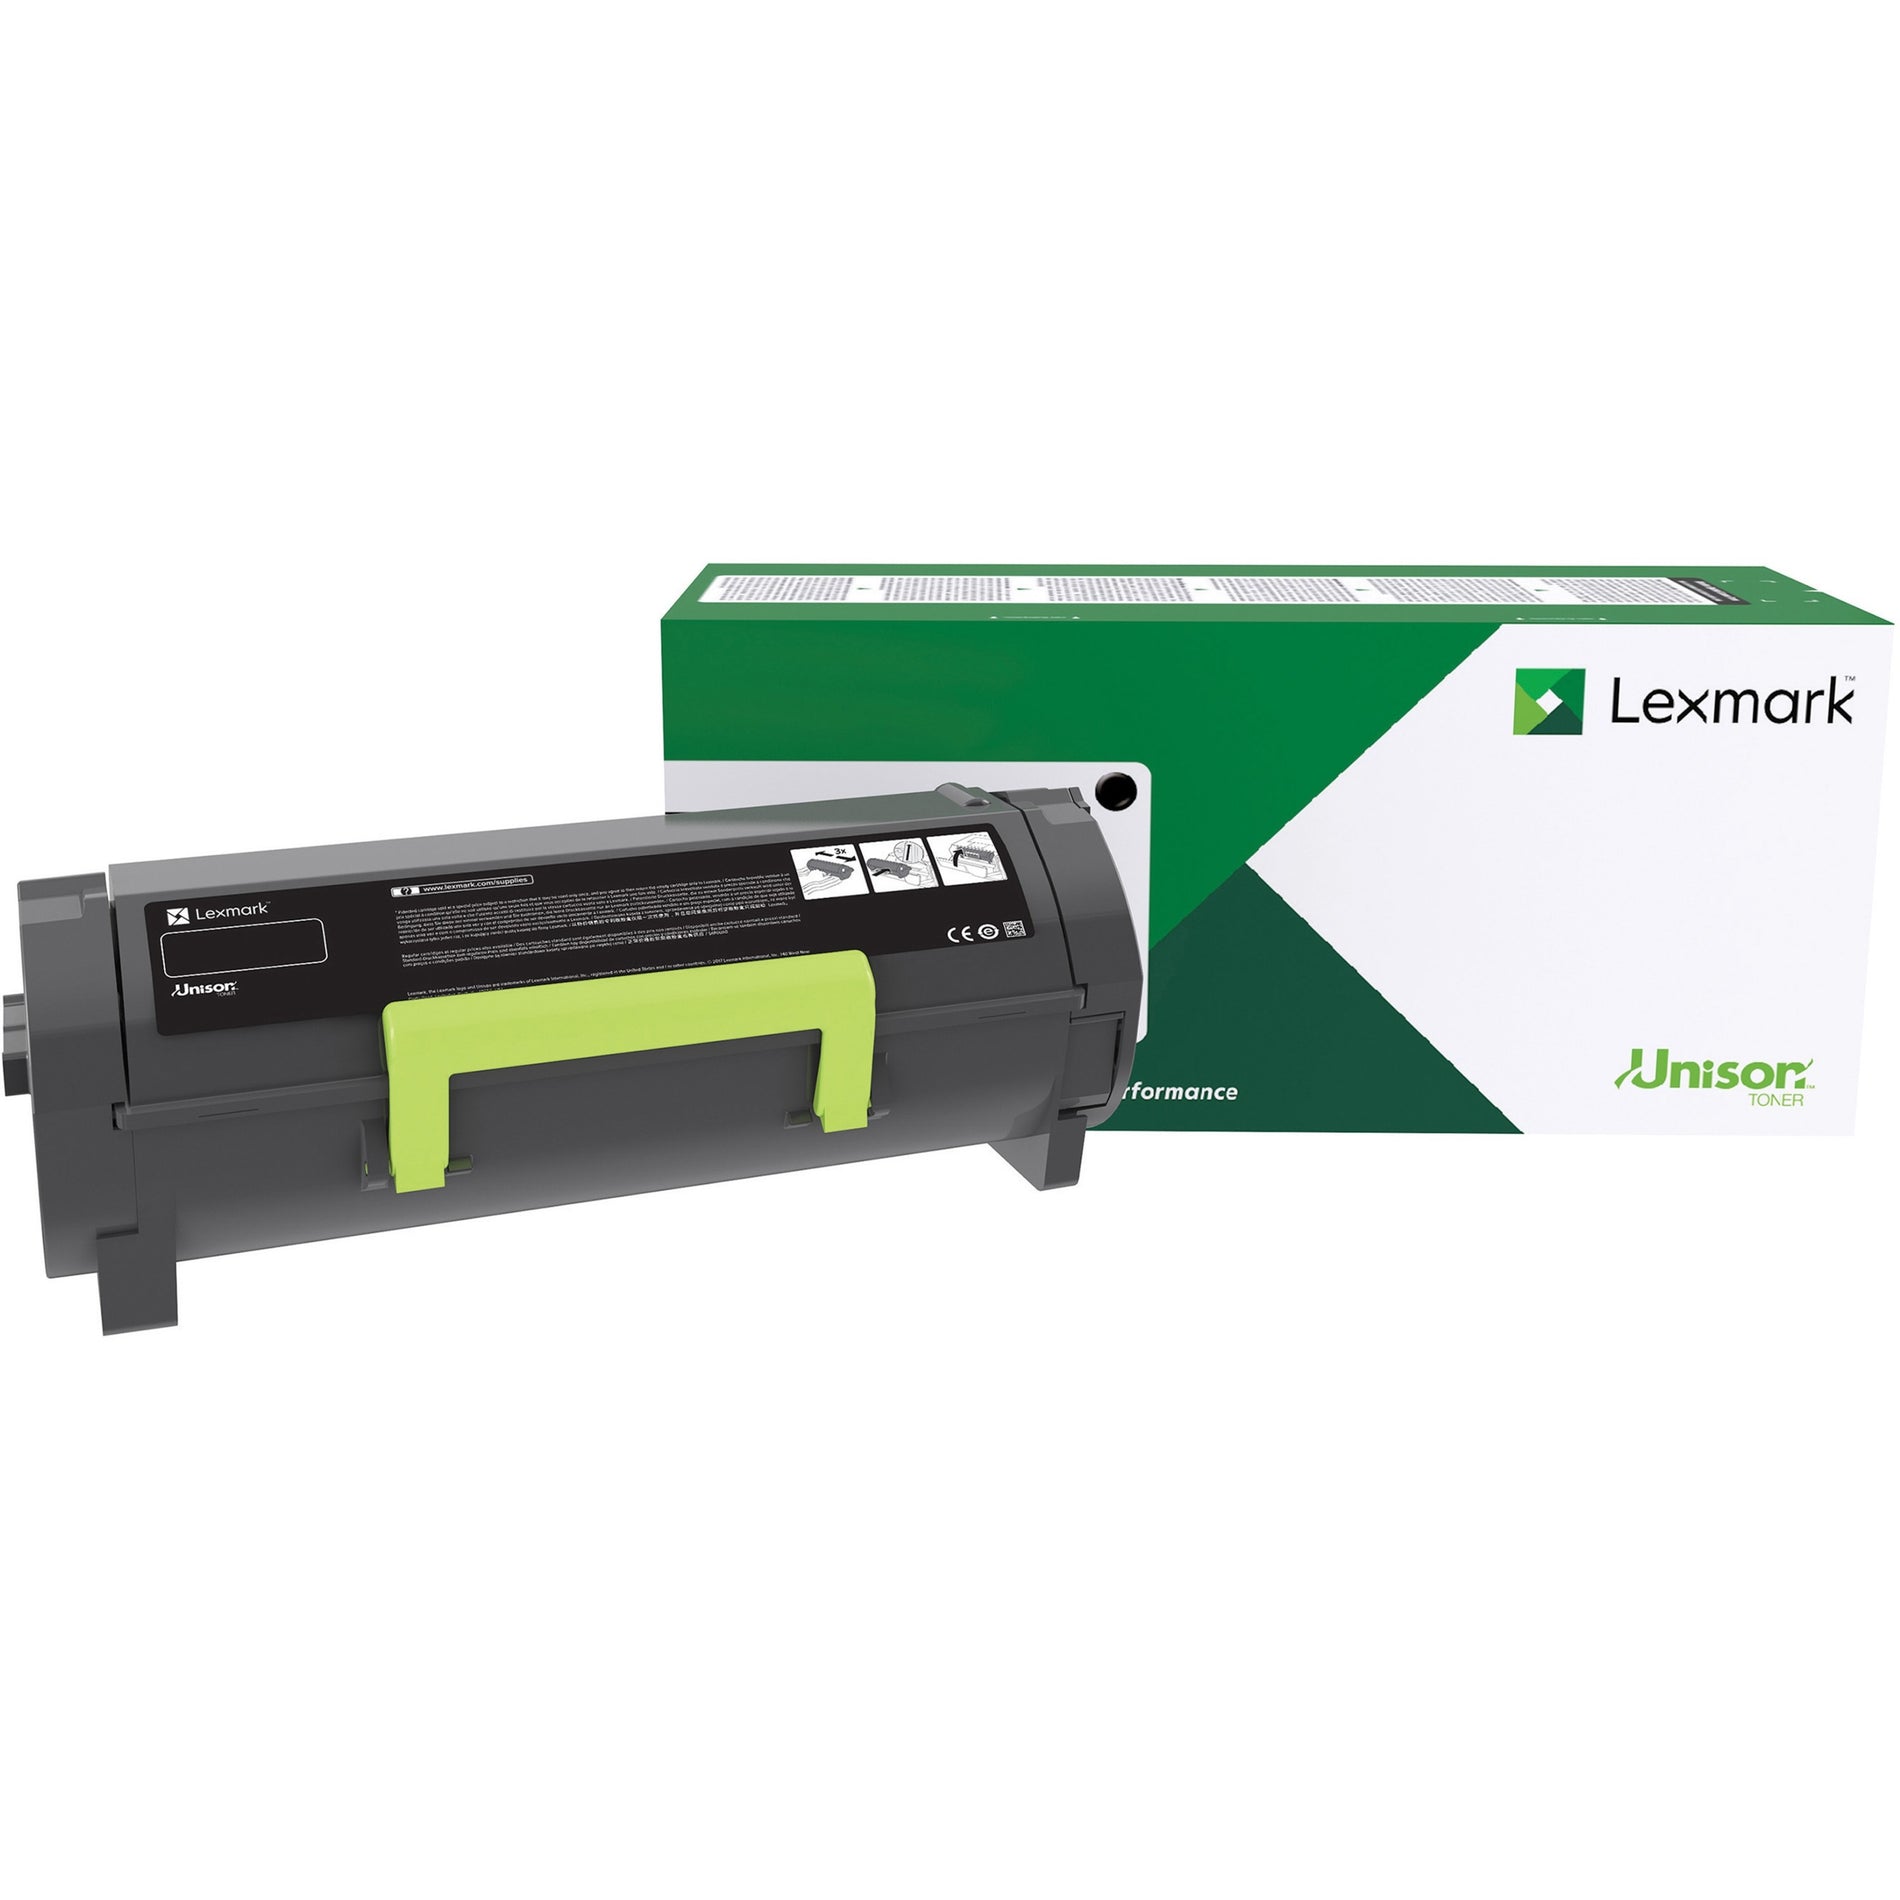 Lexmark 50F1X00 Unison 501X Toner Cartridge, 10,000 Page Yield, Black